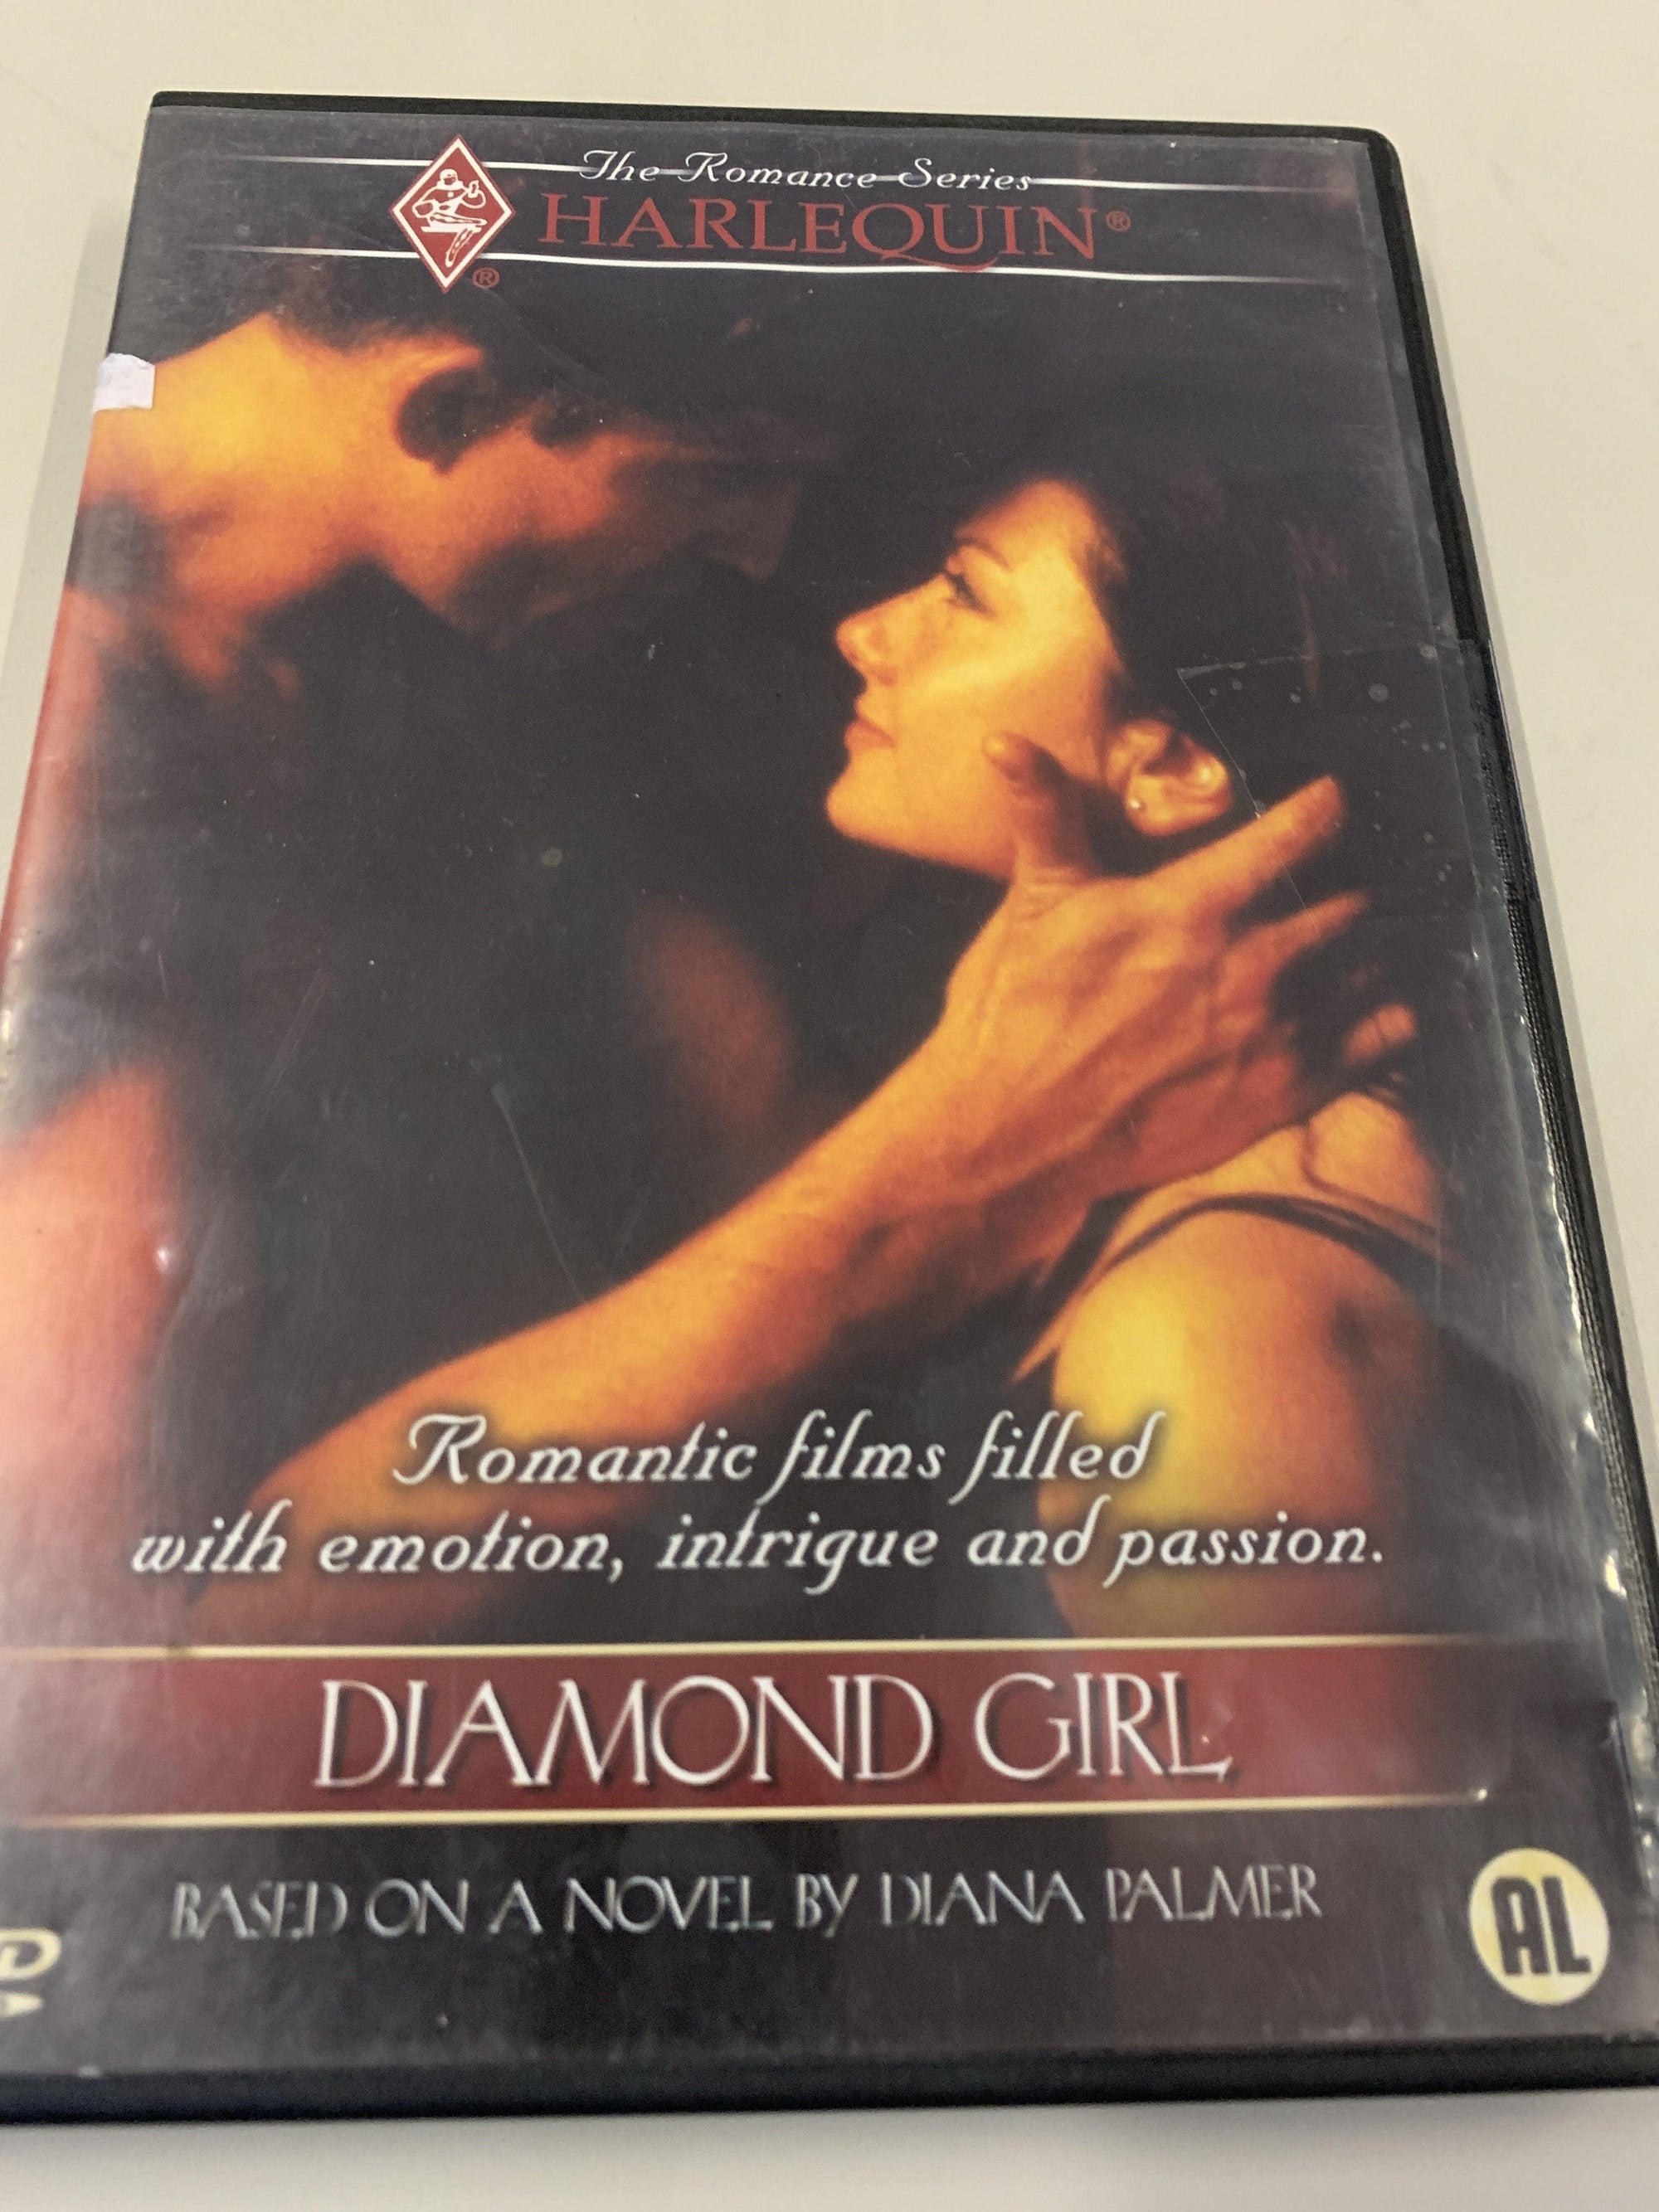 Diamond Girl-DVD - 2ndhandwarehouse.com